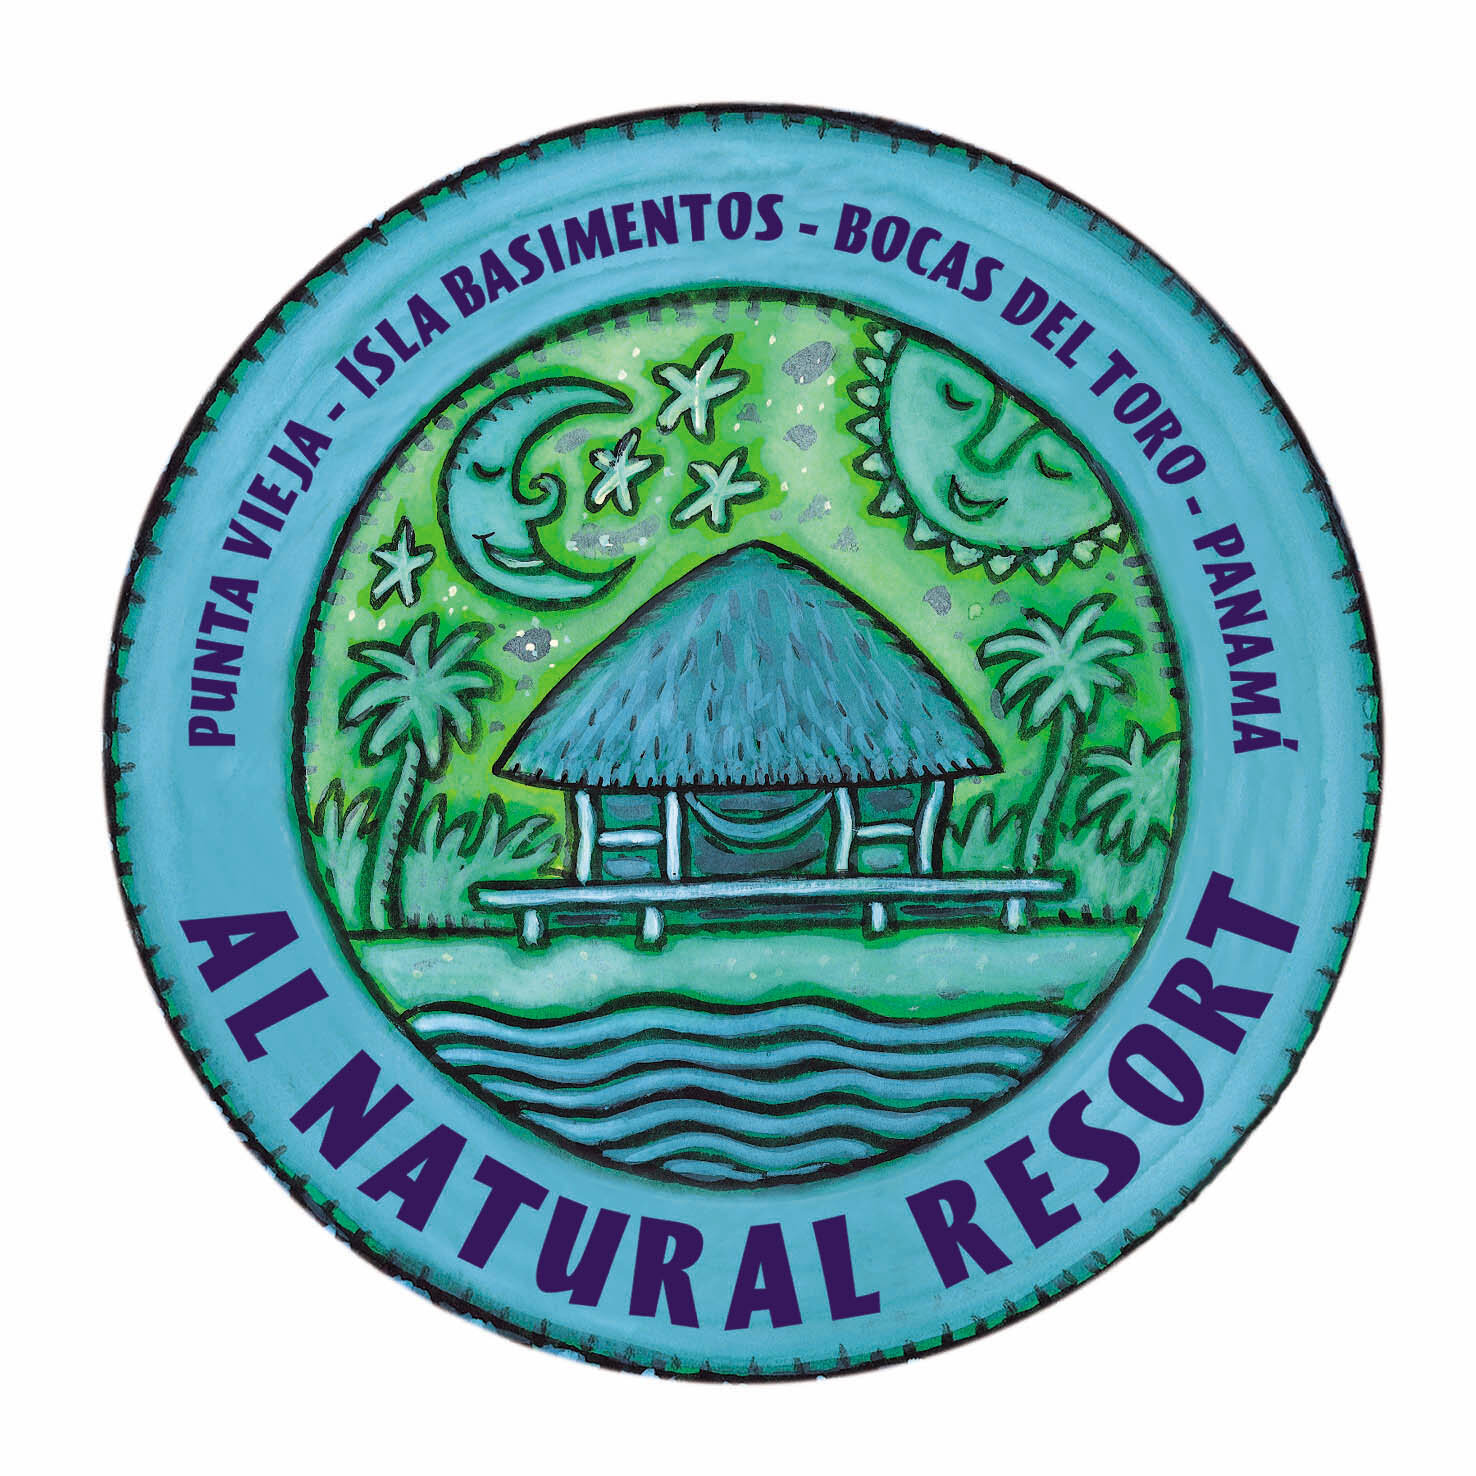 Al Natural Resort: Exclusive Boutique Eco-Resort in Panama - PLS-19952